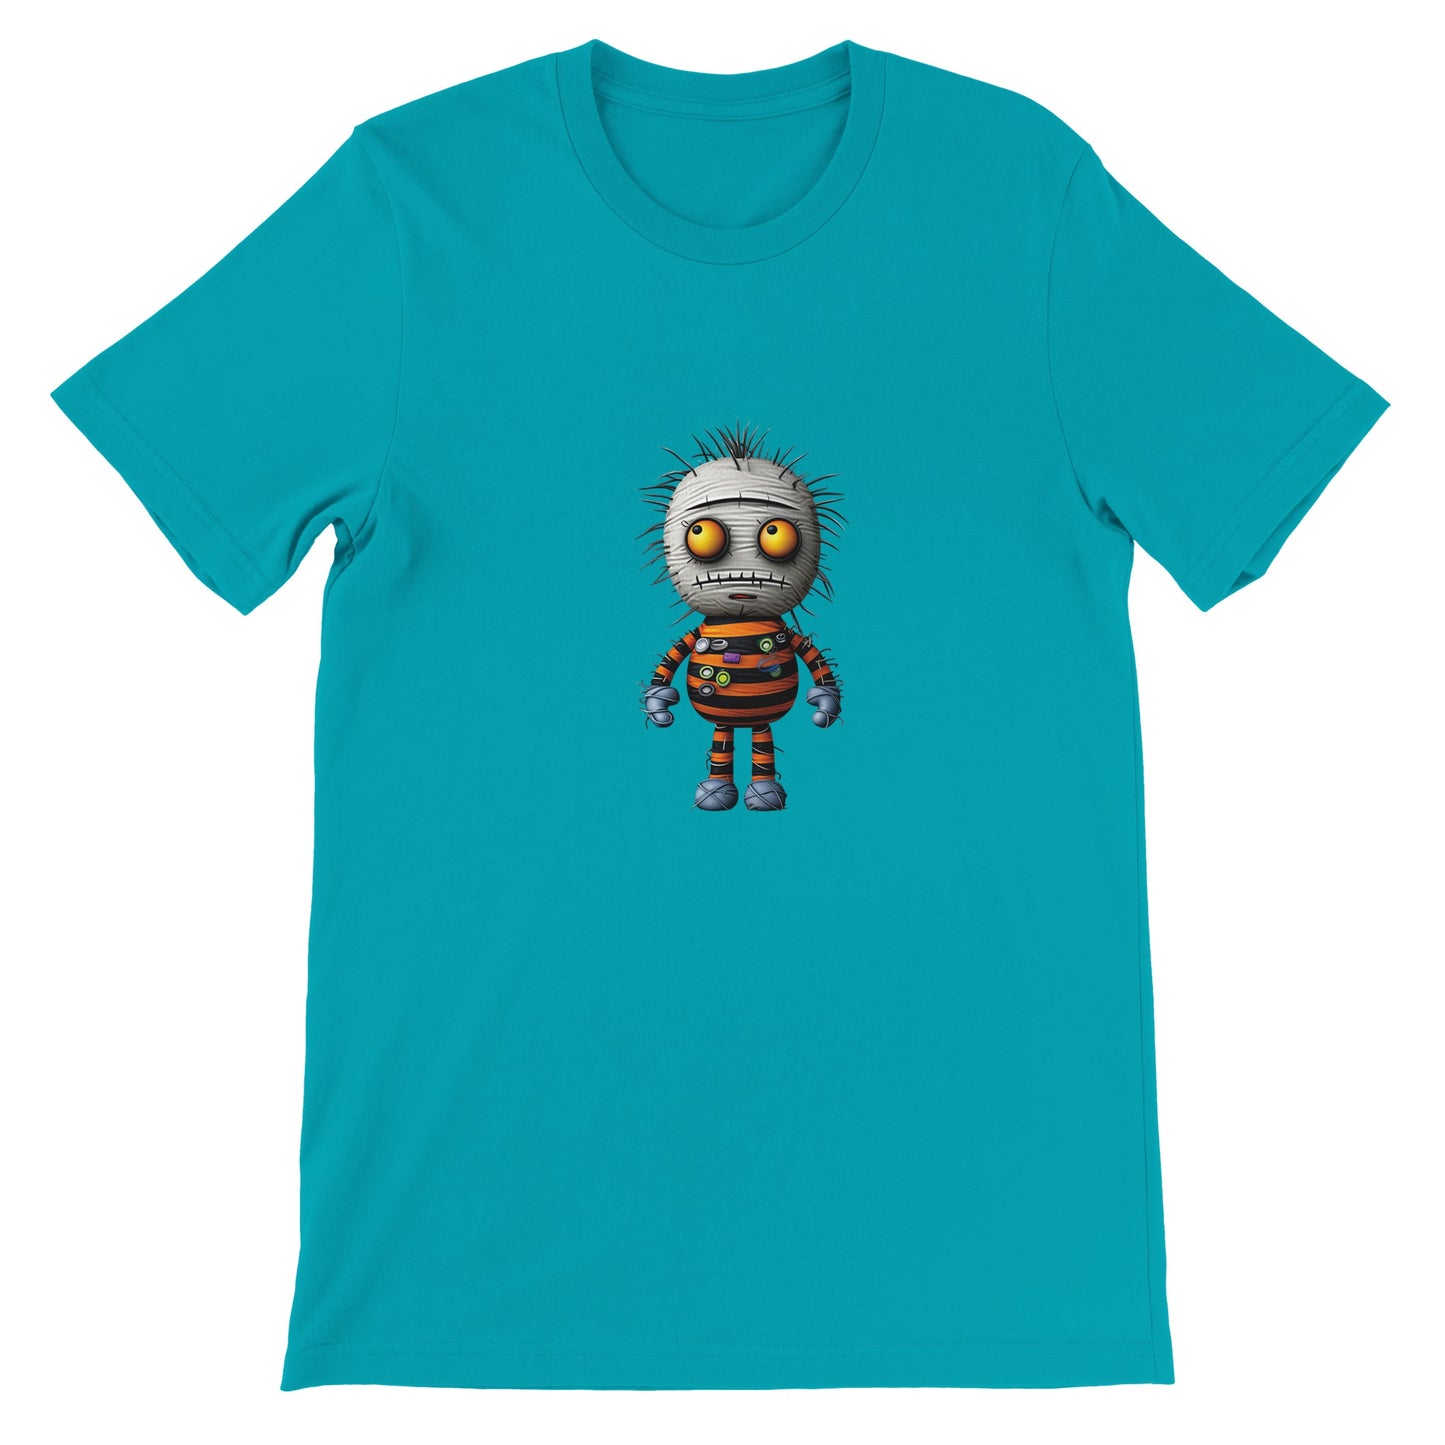 Budget Unisex Crewneck T-shirt/Funny-Spooky-Doll